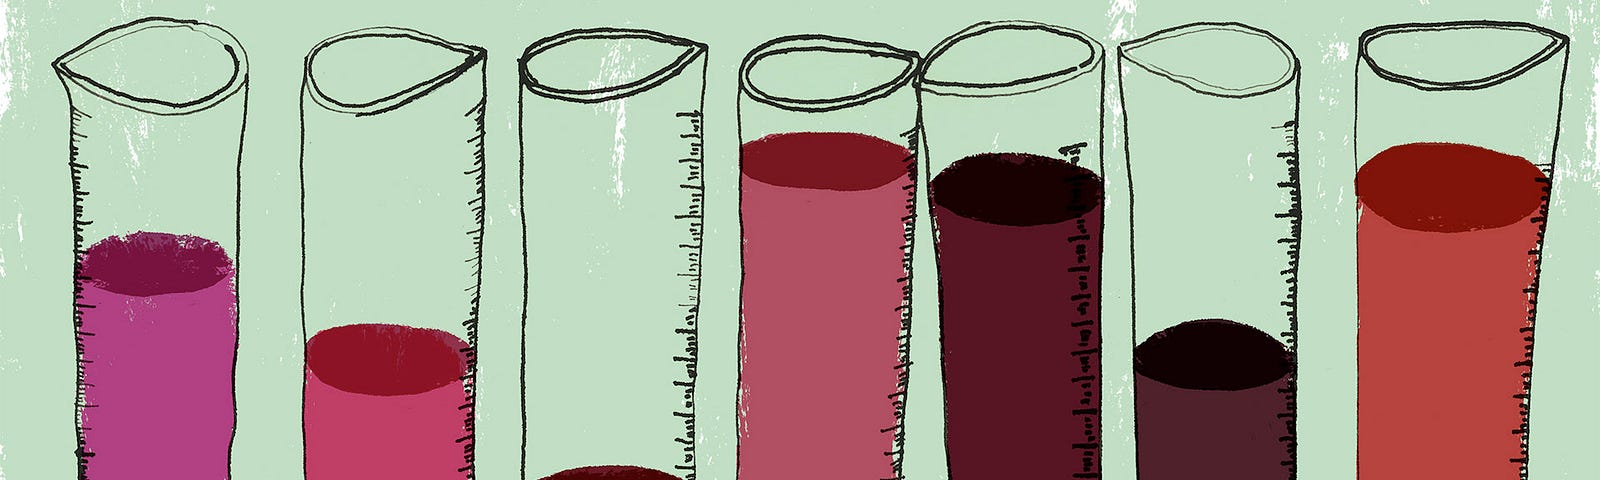 Wine test tubes — Illustration by Rebecca Bradley